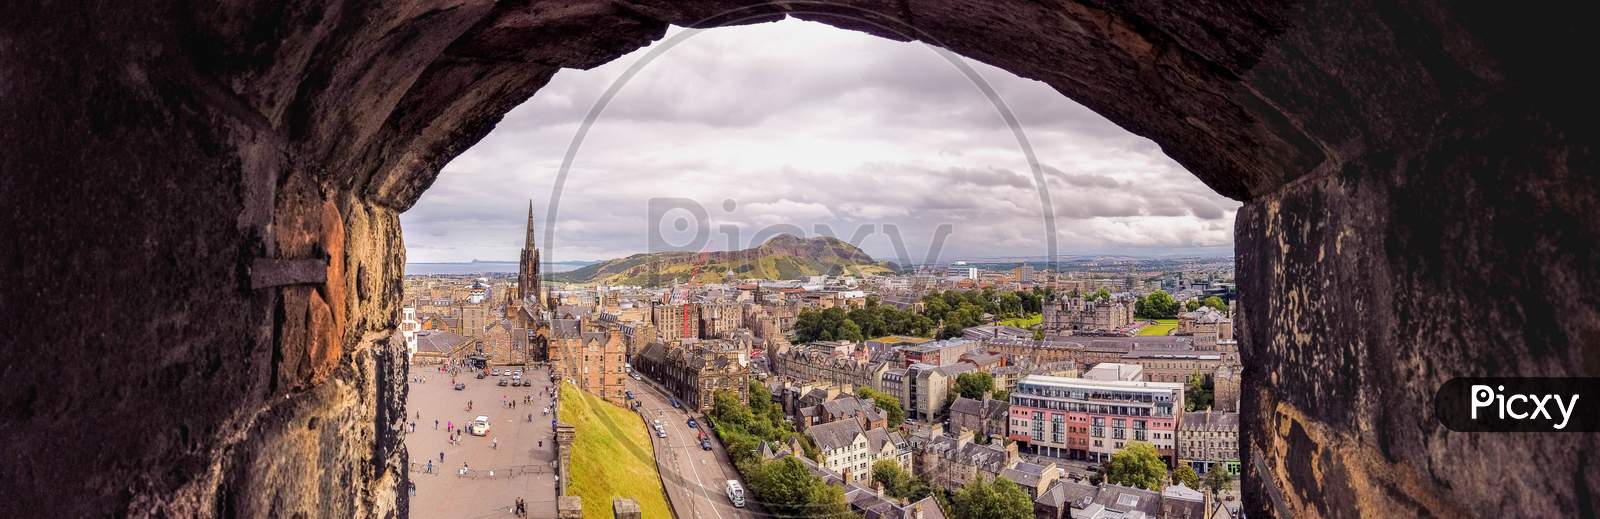 Edinburgh Castle Scotland